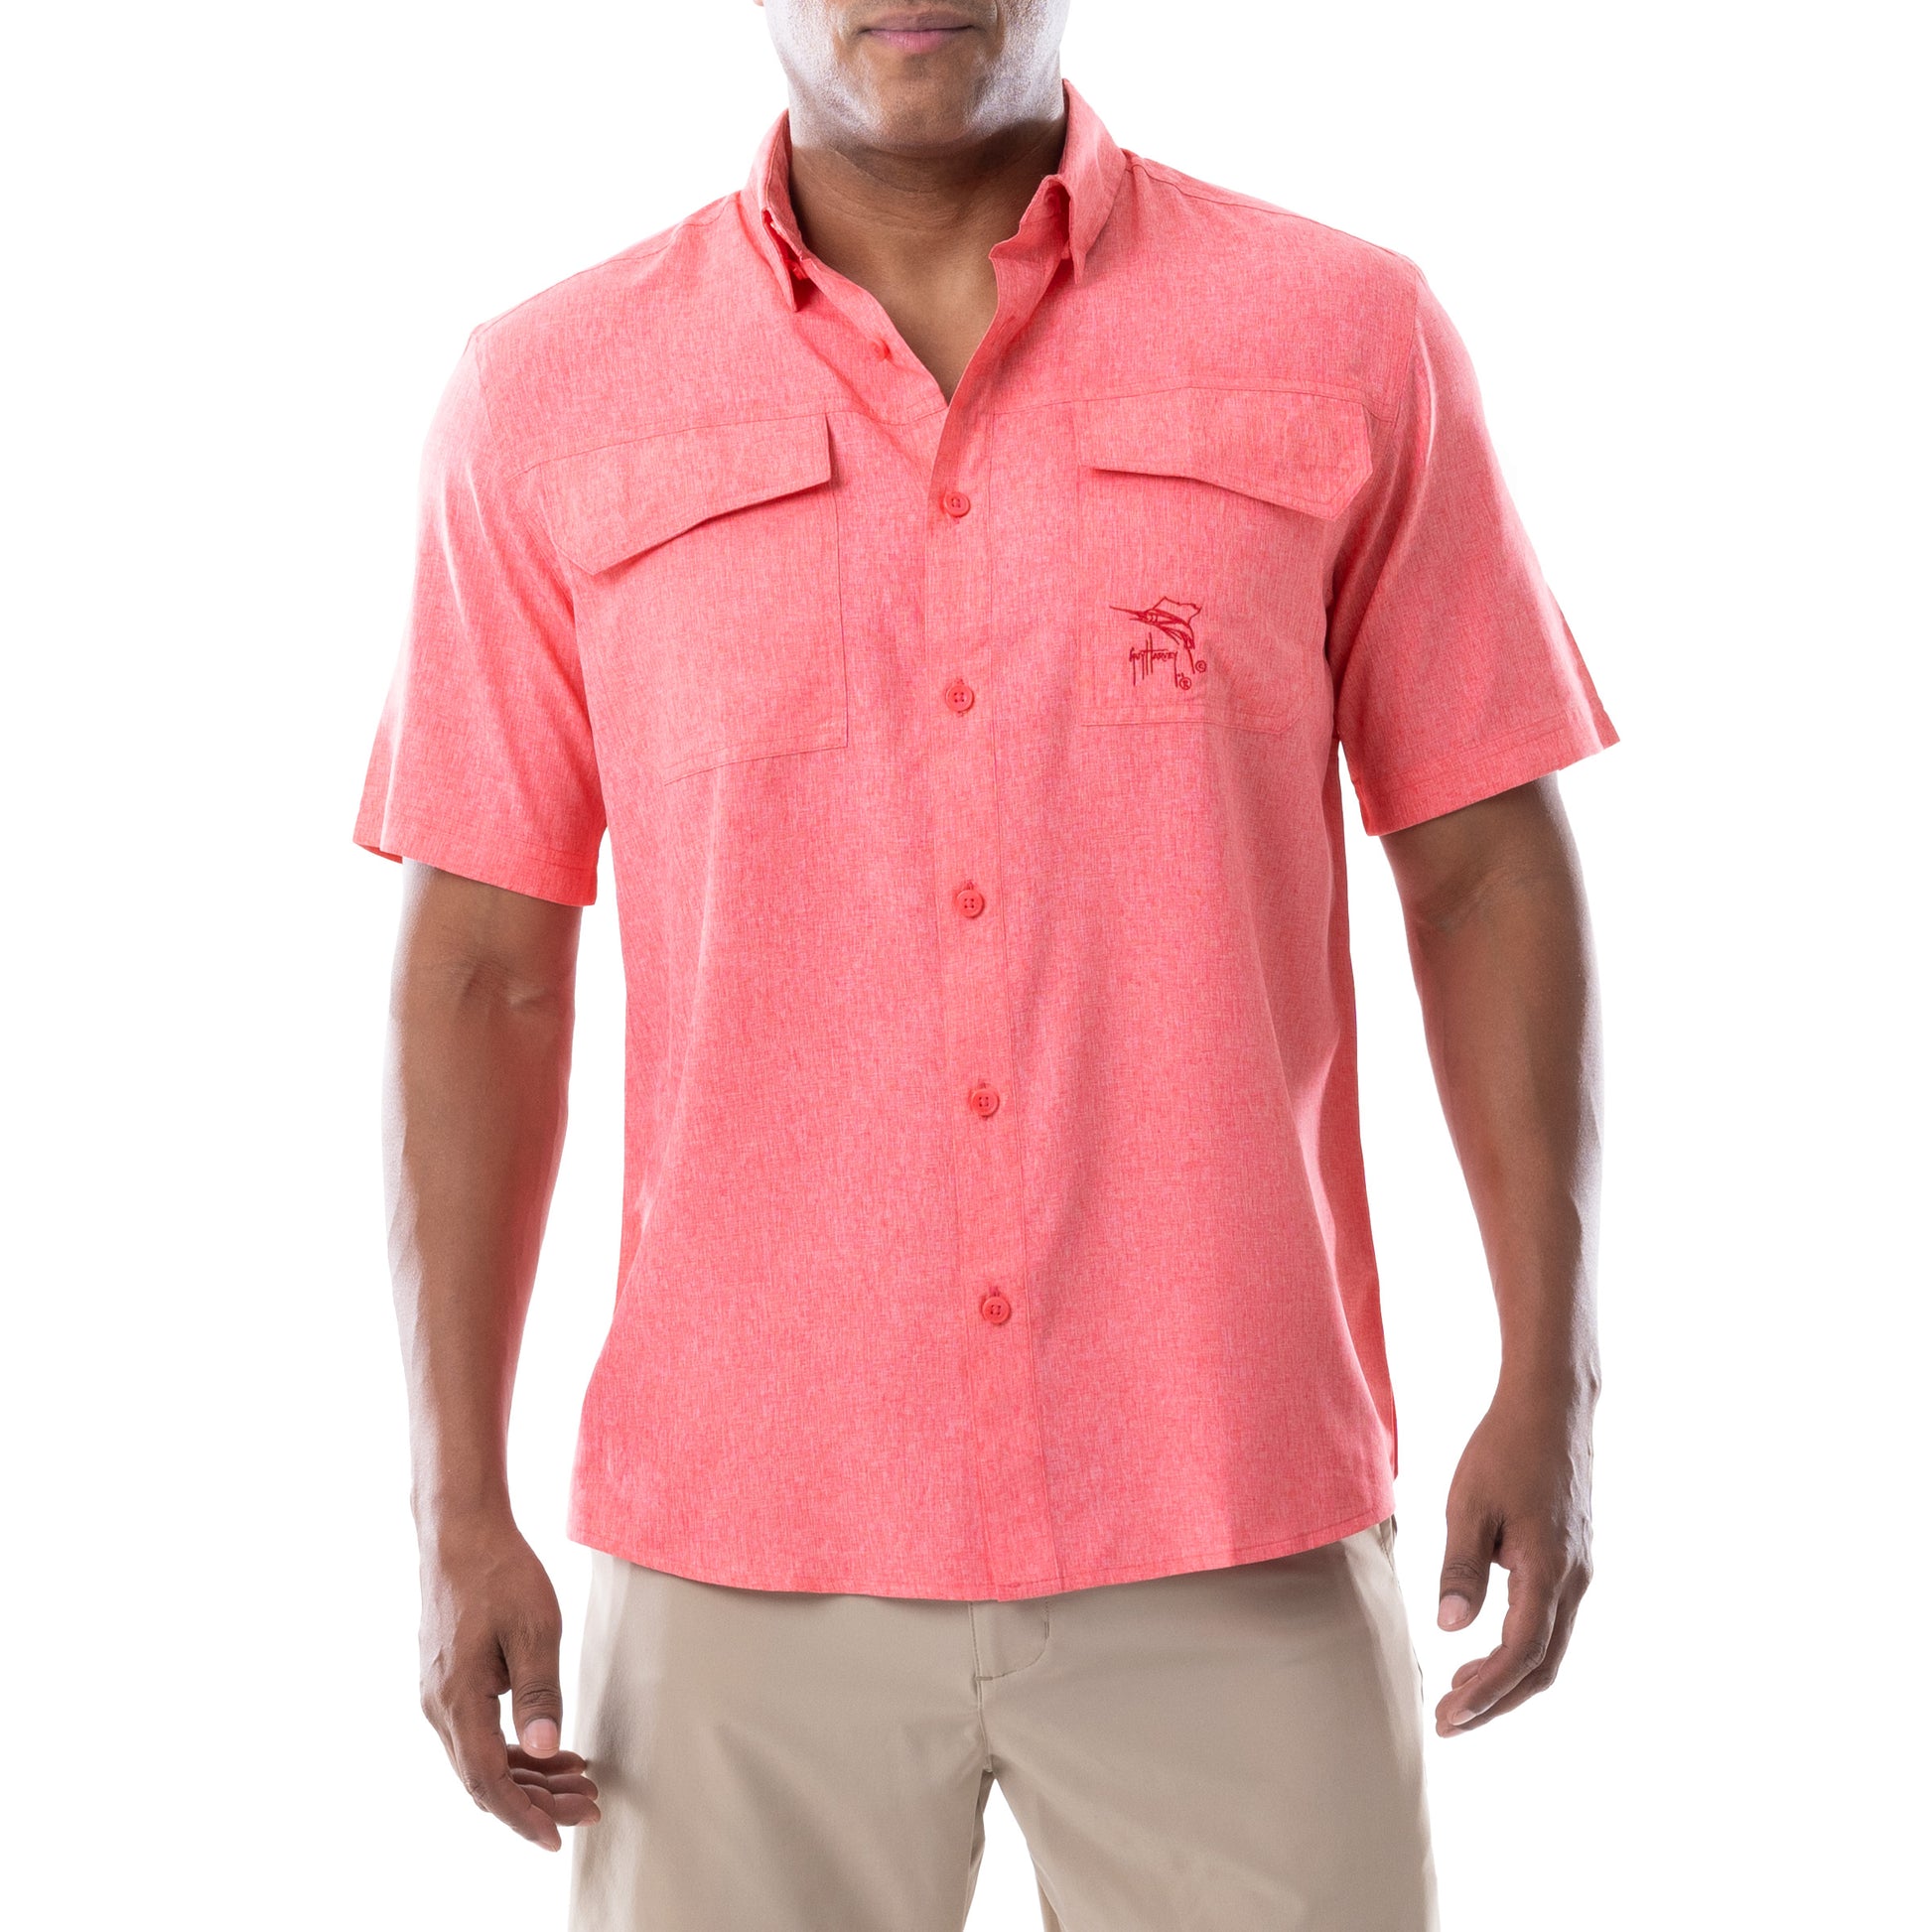 Men's Fishing Shirt FRONT PRINT / Unisex Short Sleeve Tee Outdoor